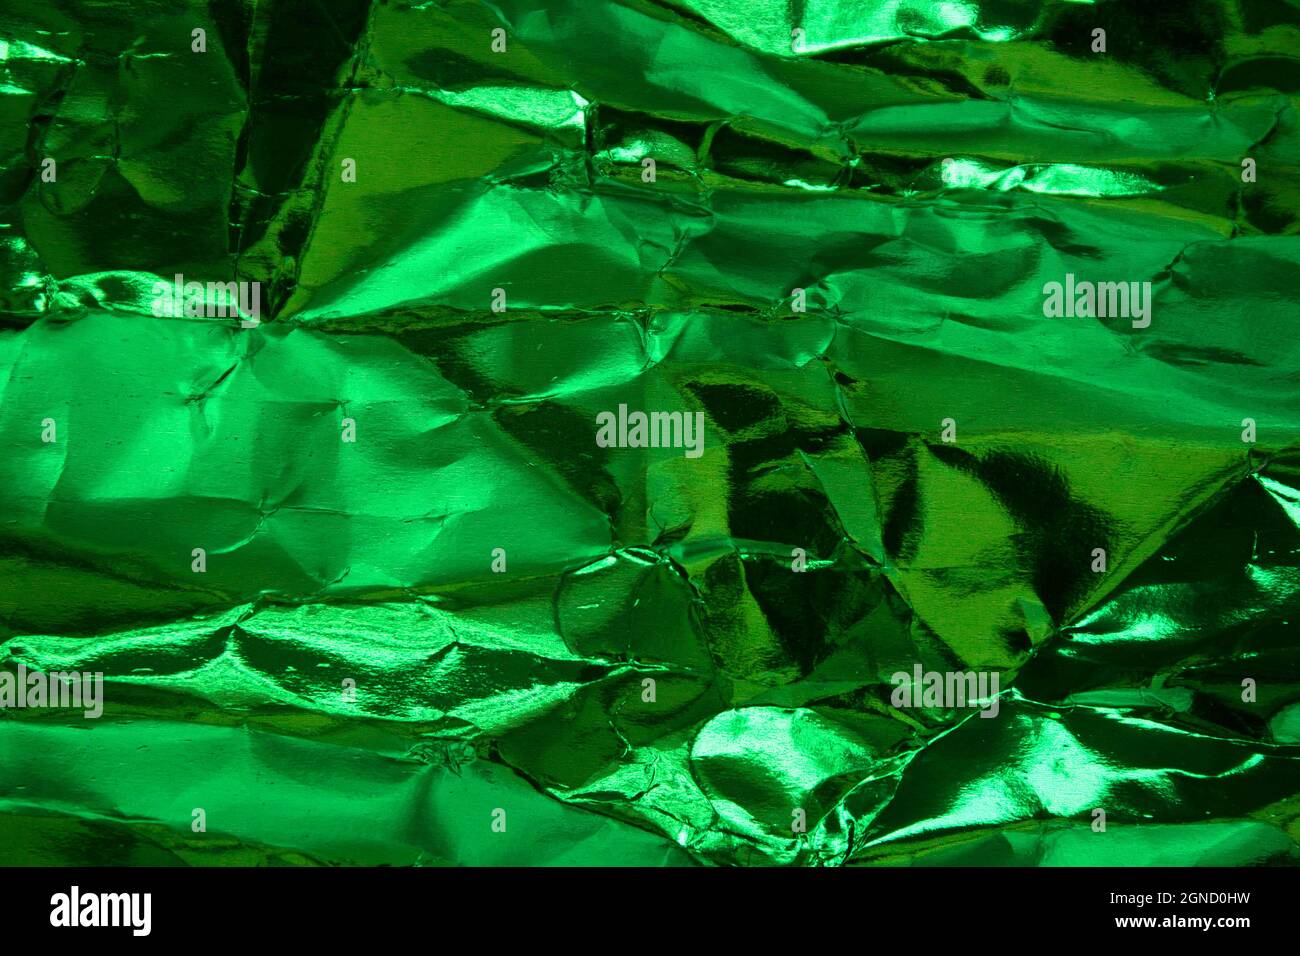 Seamless Dark Emerald Green Wrinkled Metallic Foil Christmas